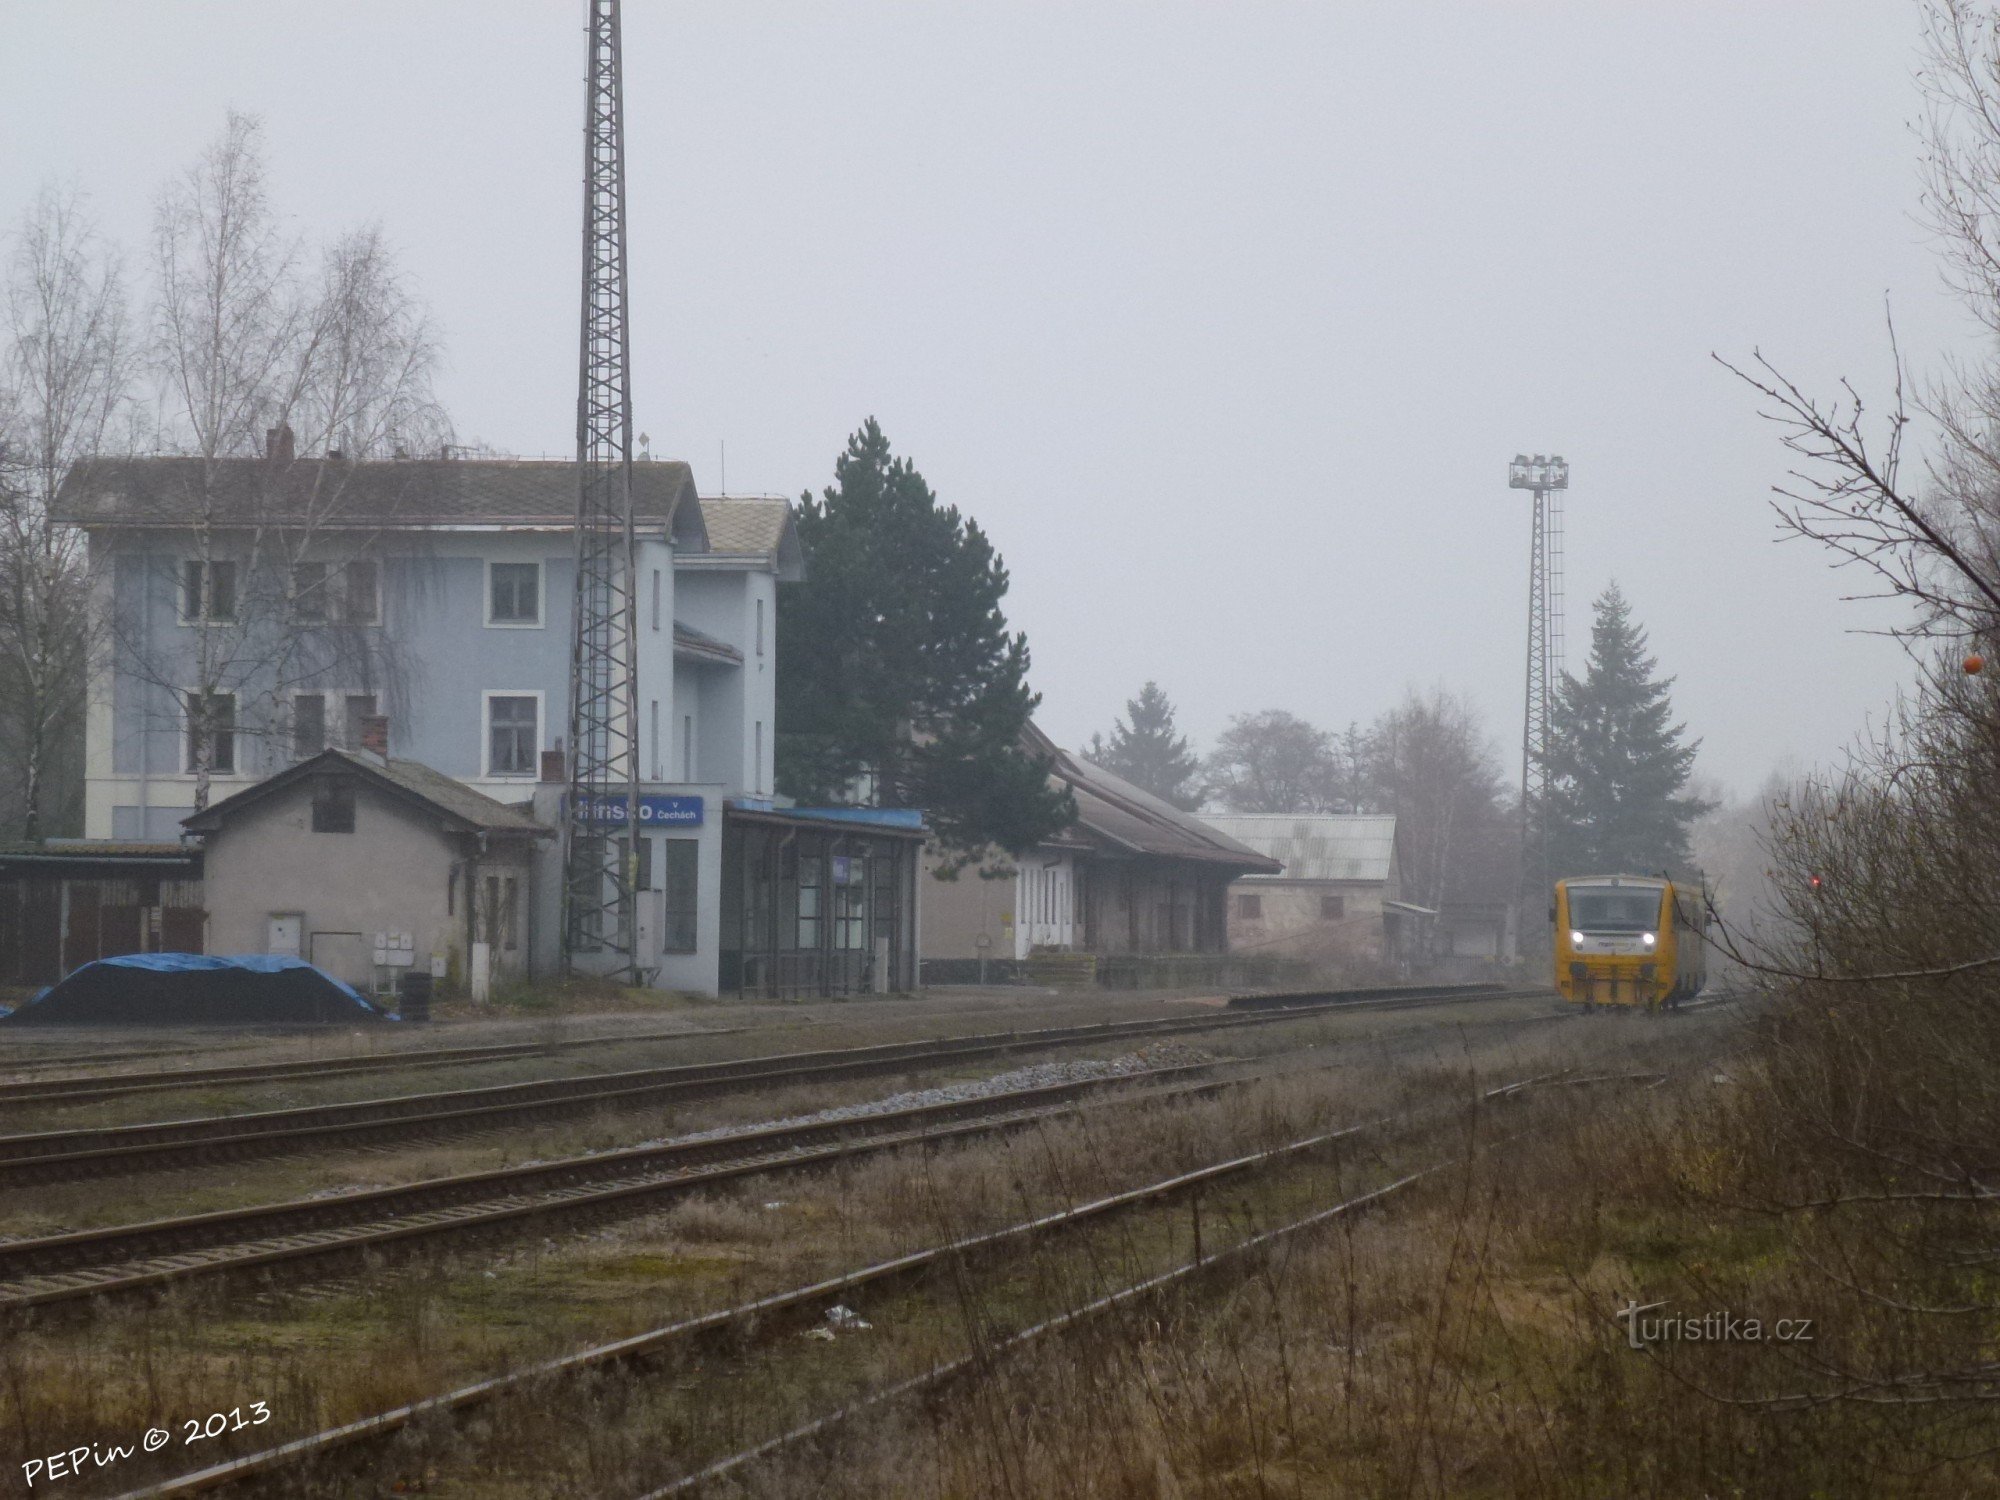 Hlinsko ở Bohemia, ga đường sắt, sân theo dõi